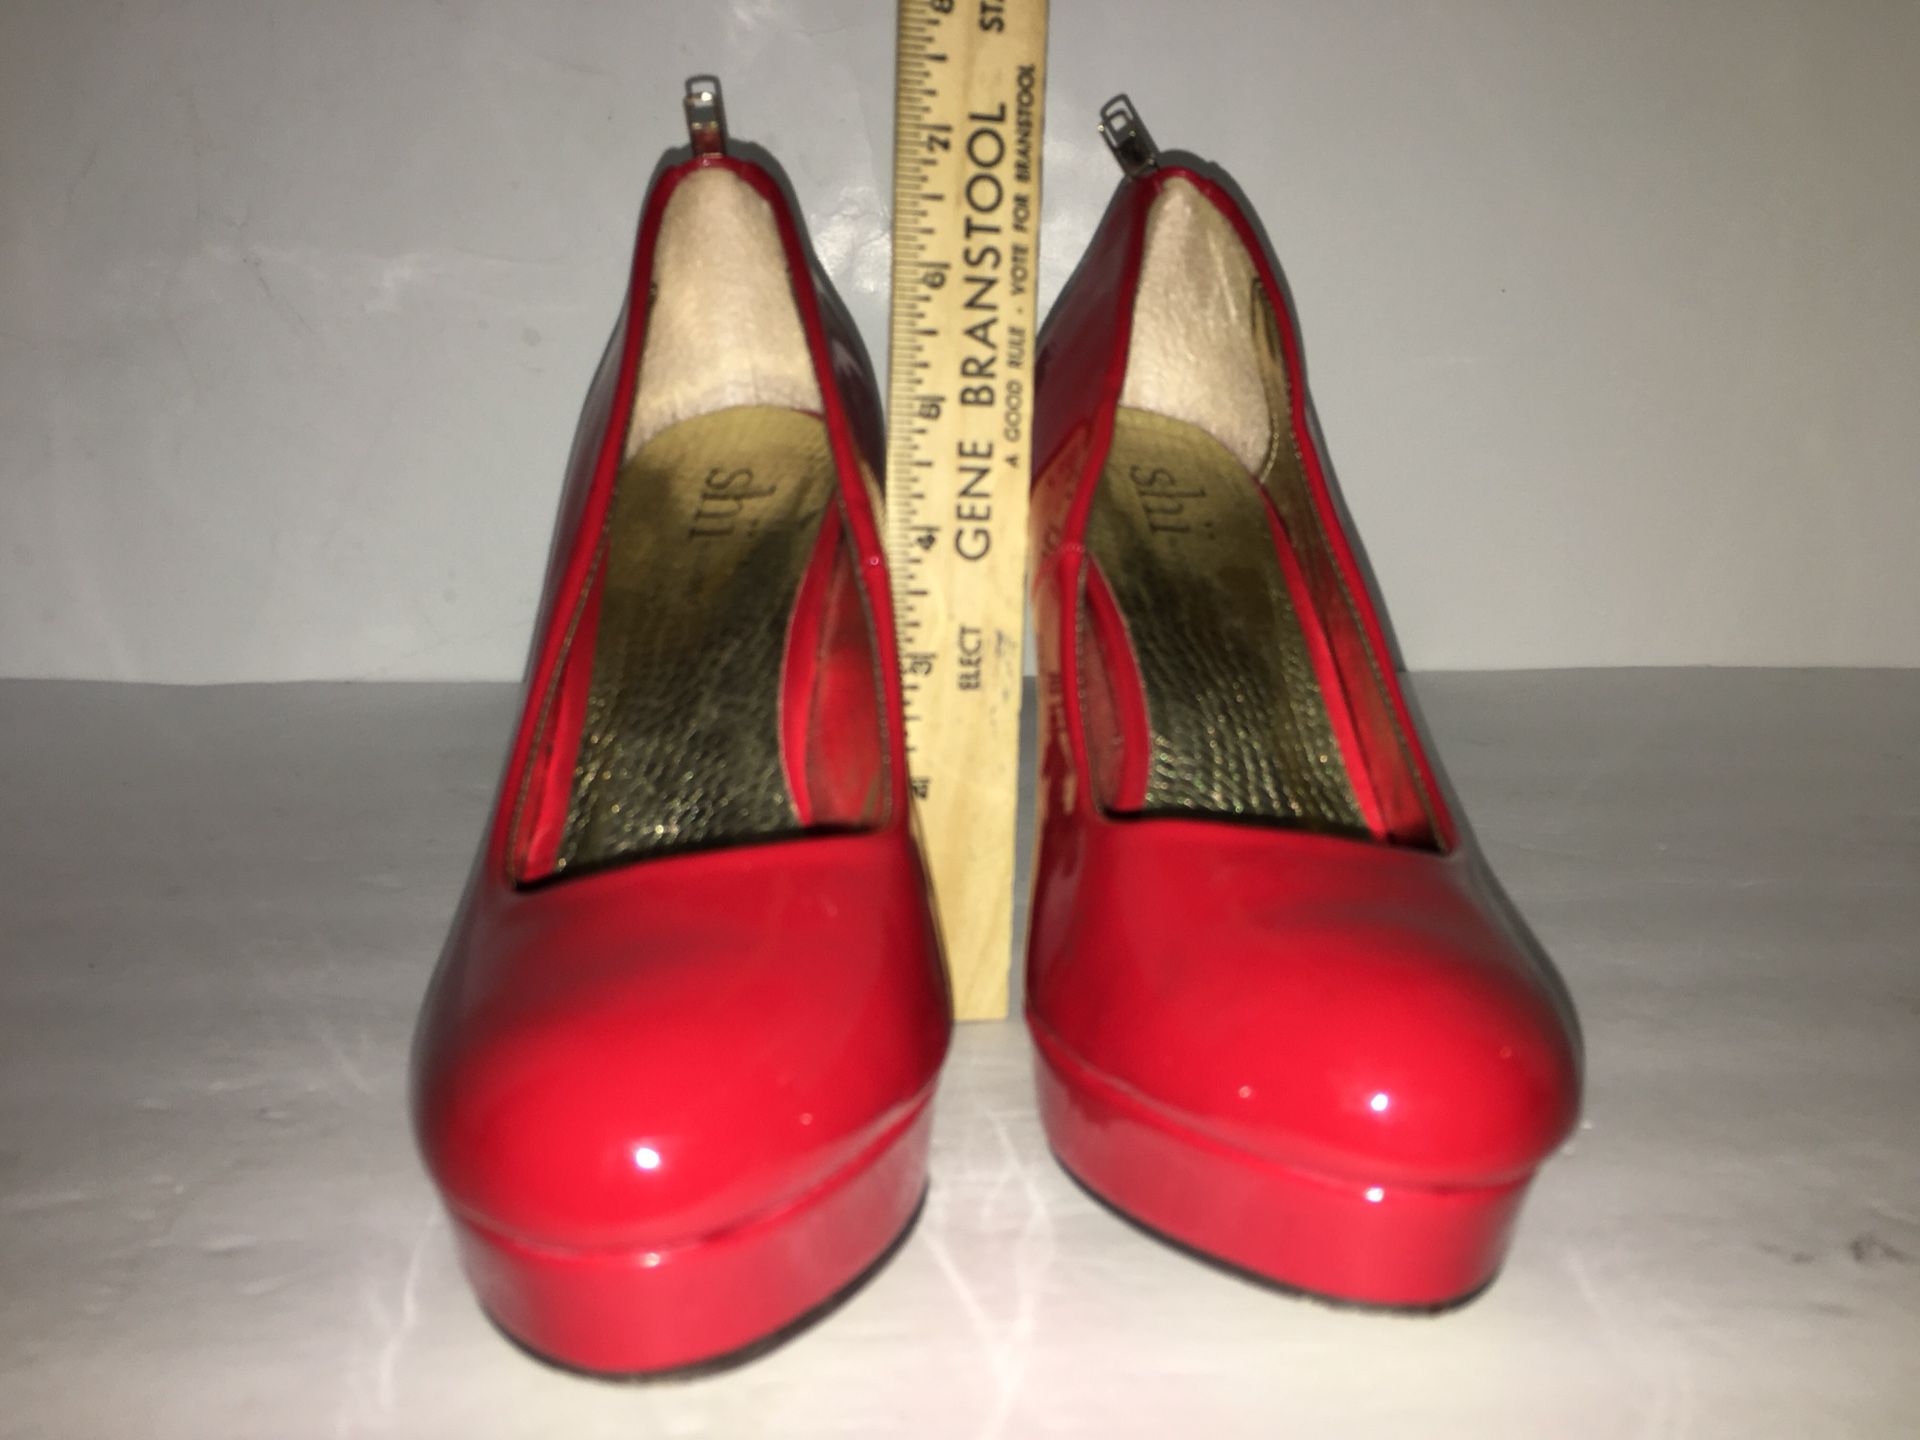 Shi sz 7.5 red stilettos high heel shoes like NEW $10